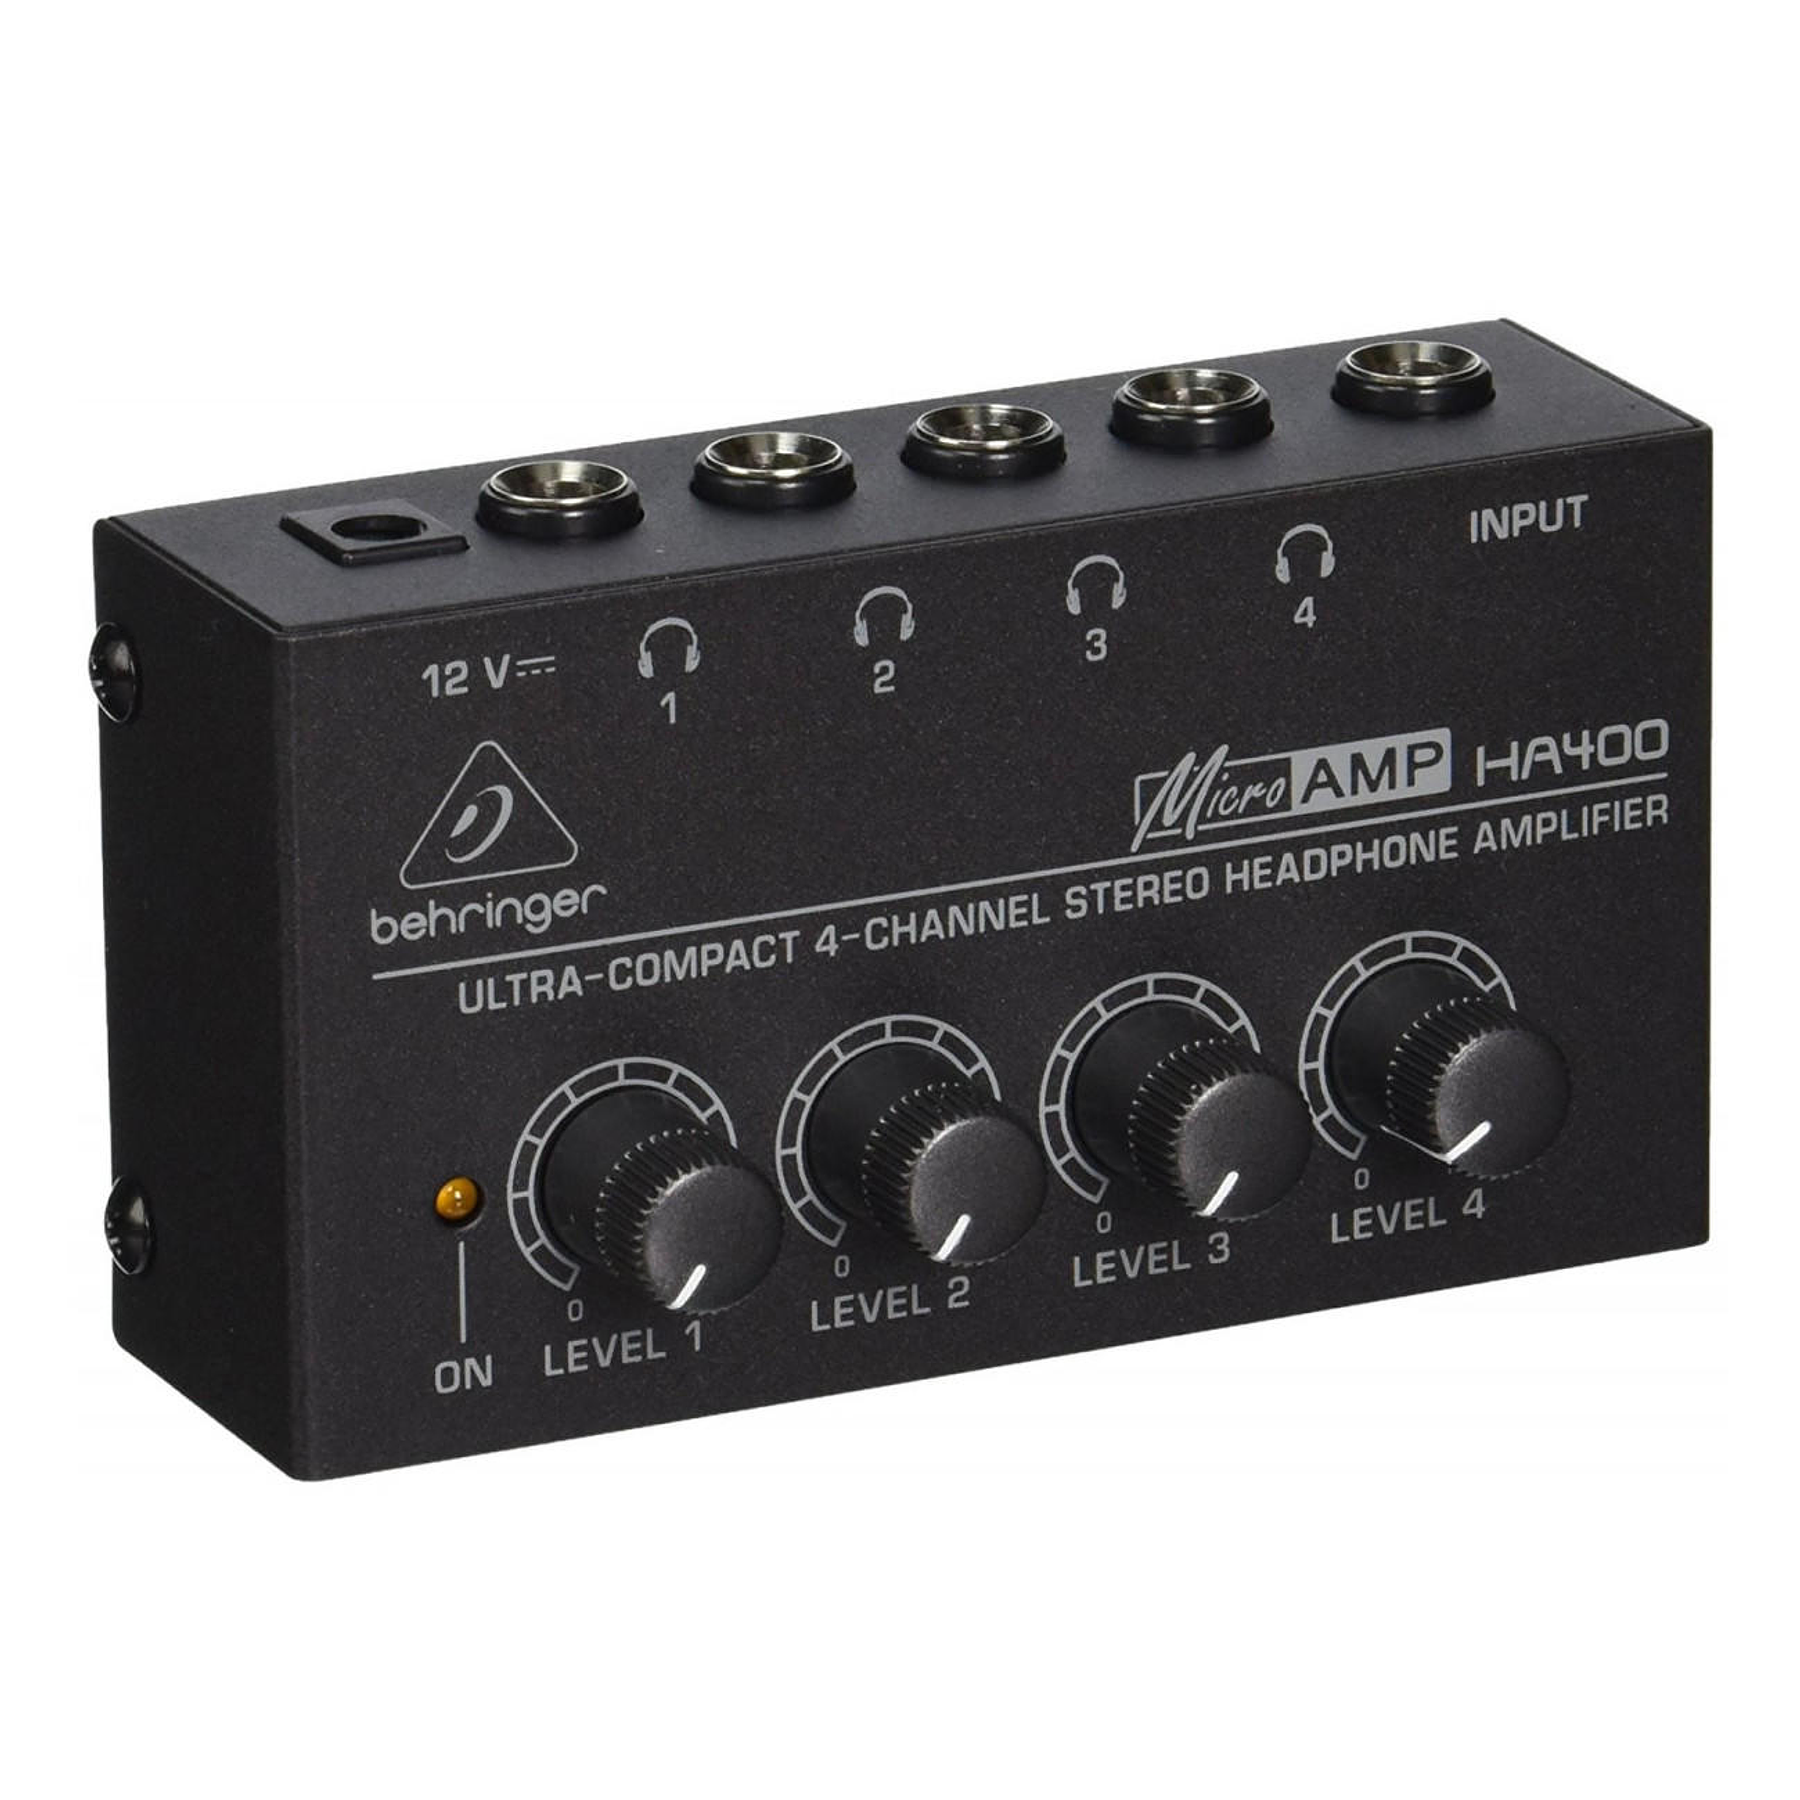 Amplificador de Audifonos Behringer MicroAMP HA400